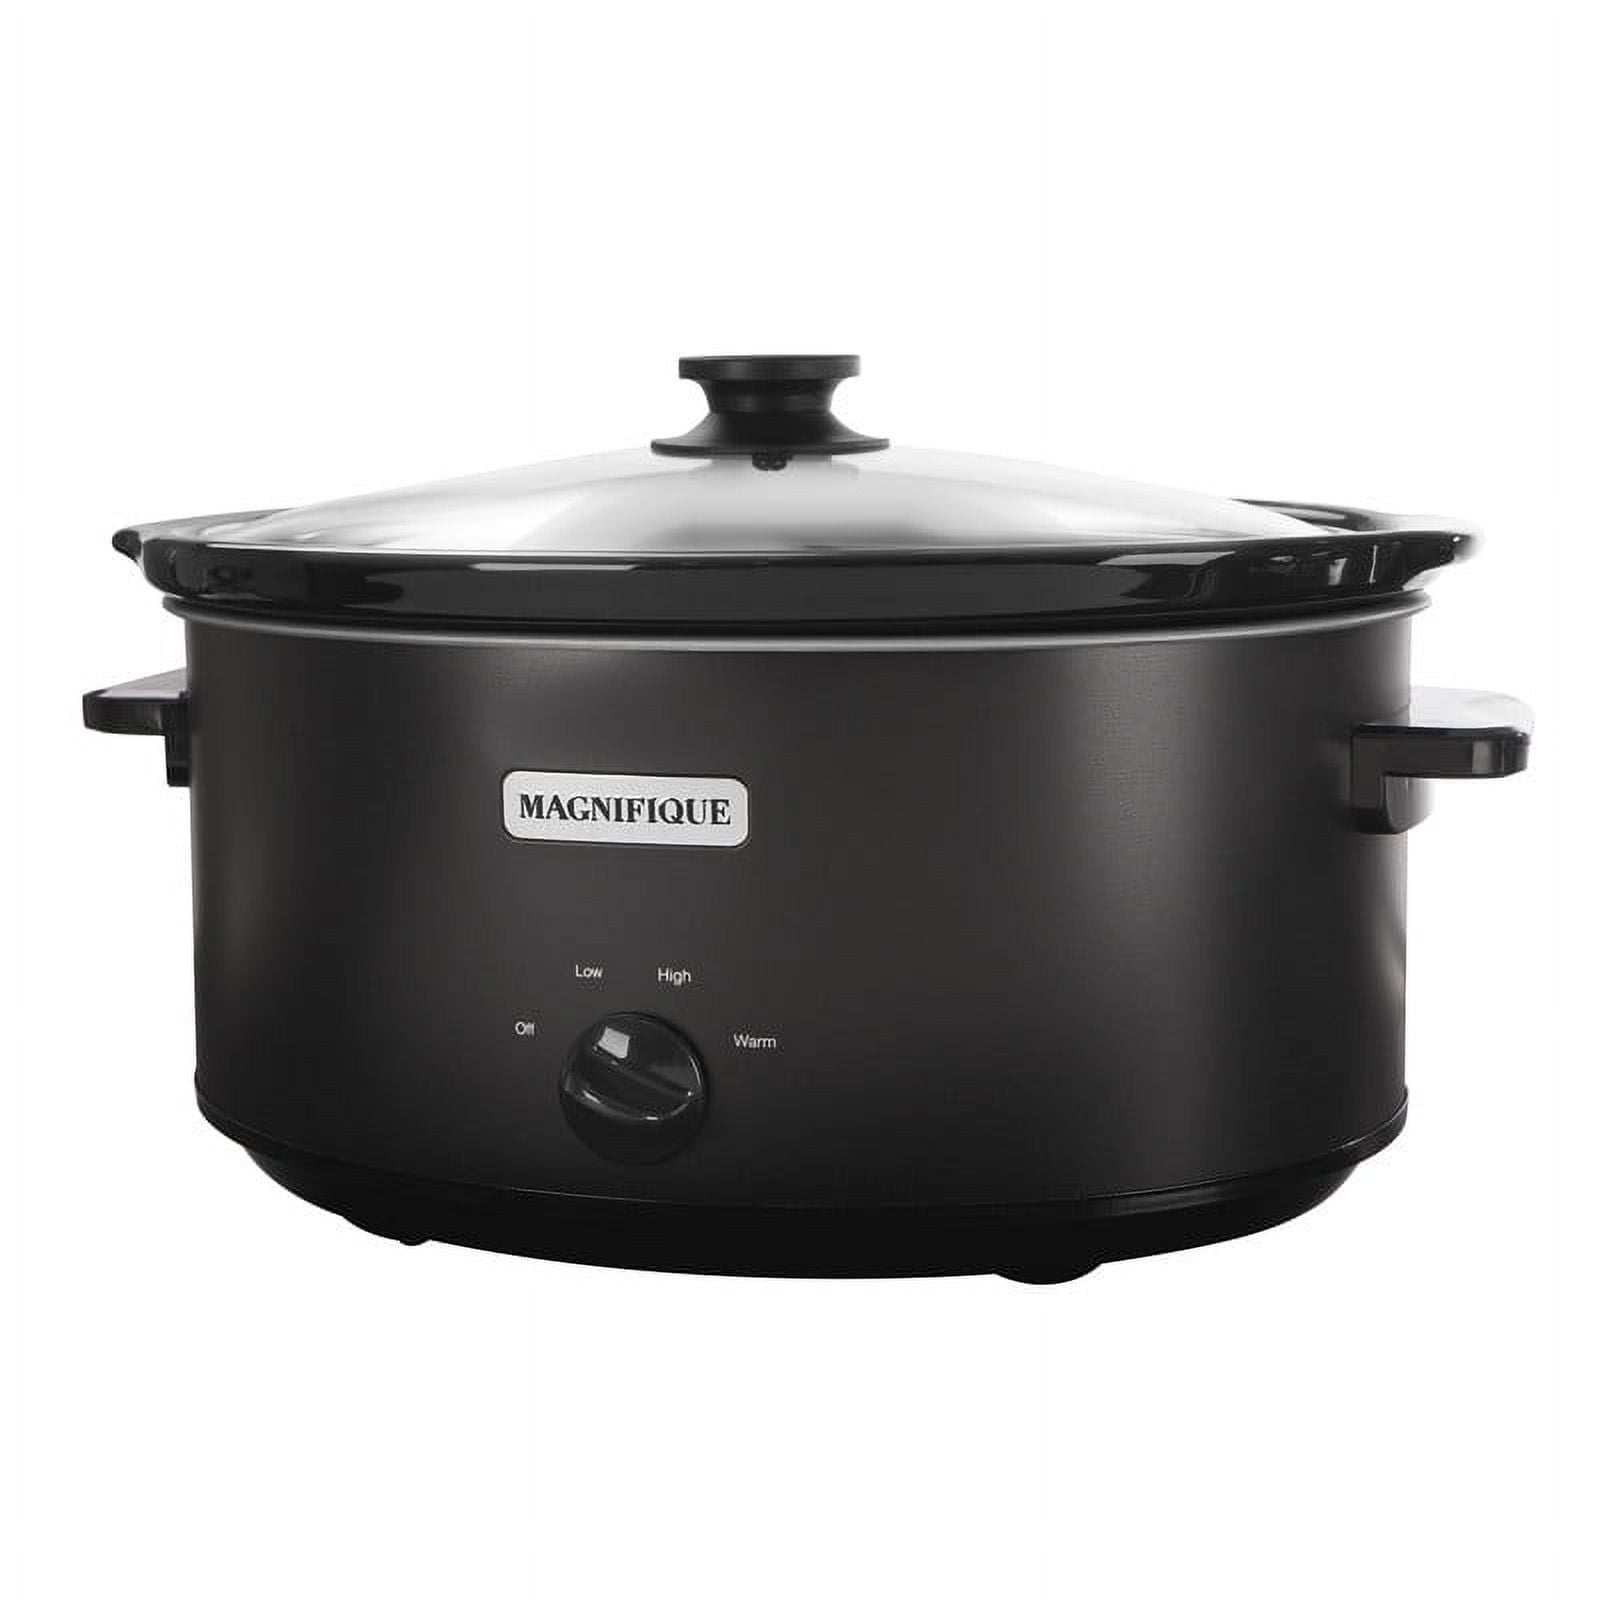 Healthy Choice 8l Slow Cooker (black) Large Capacity Ceramic Pot